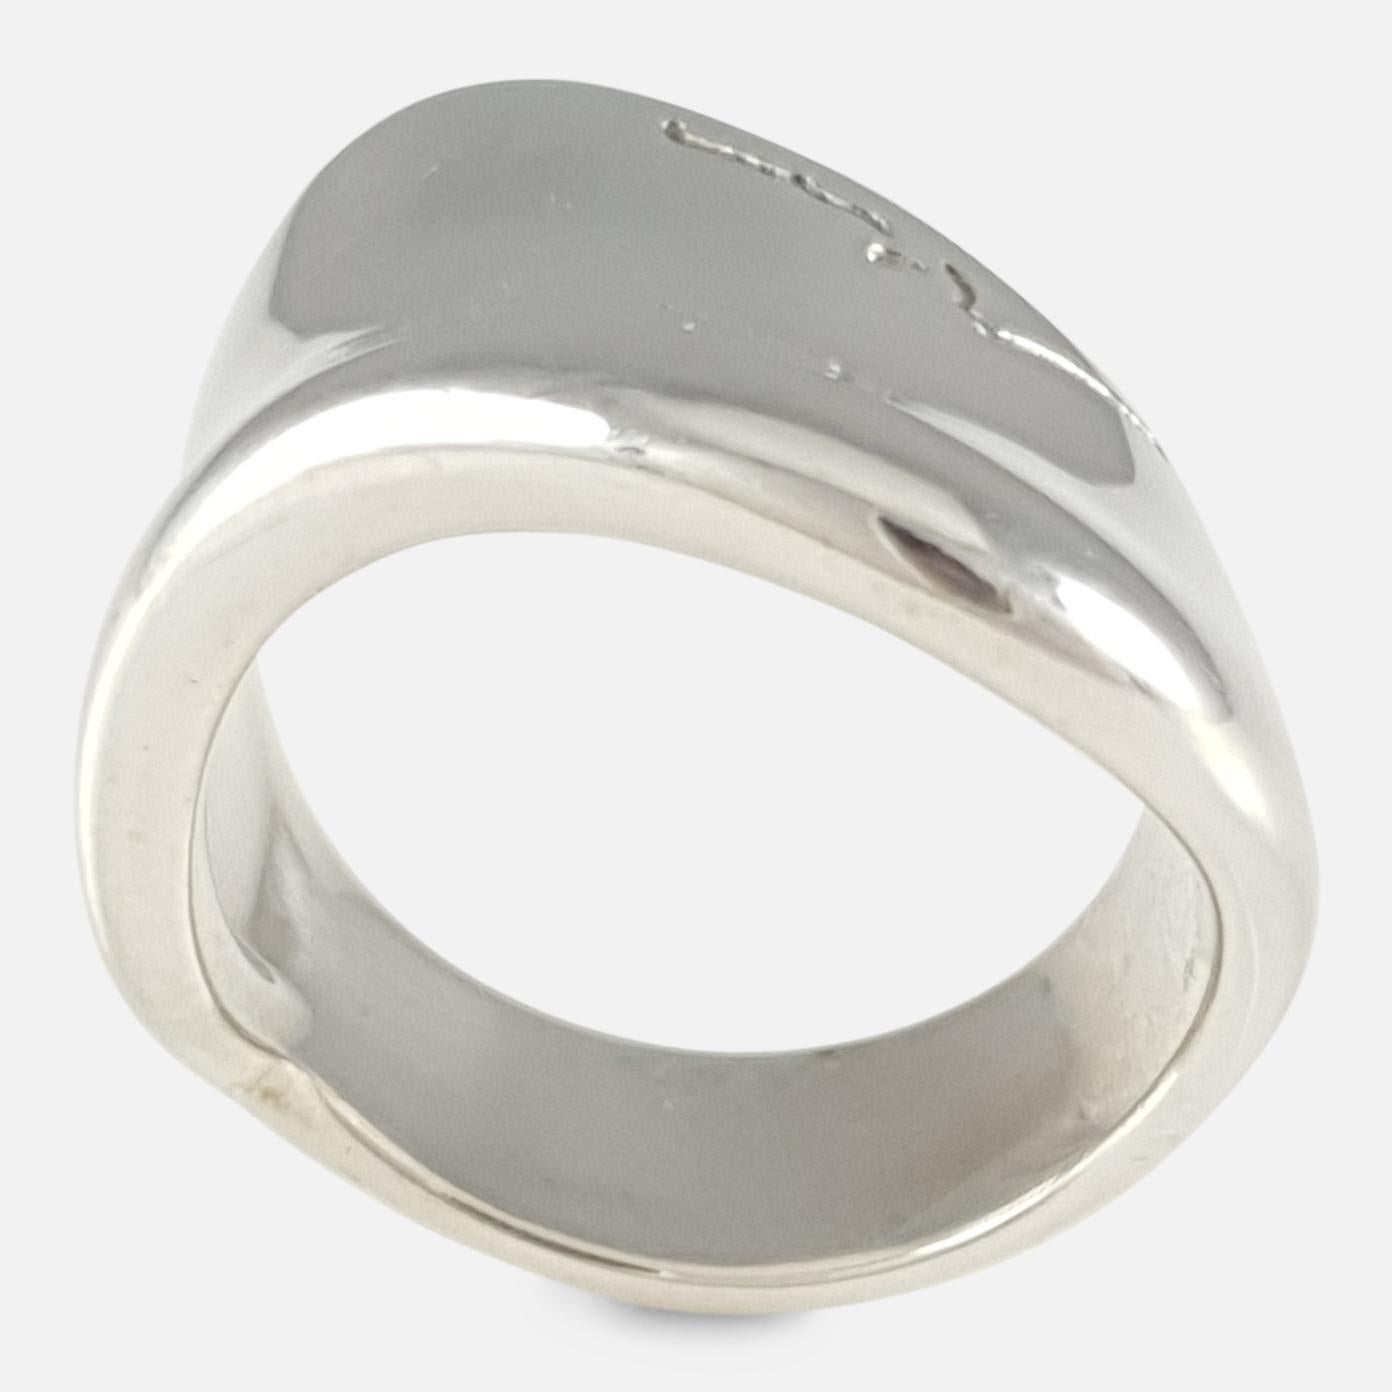 Women's Georg Jensen Danish Sterling Silver Modernist Ring #257 by Minas Spiridis